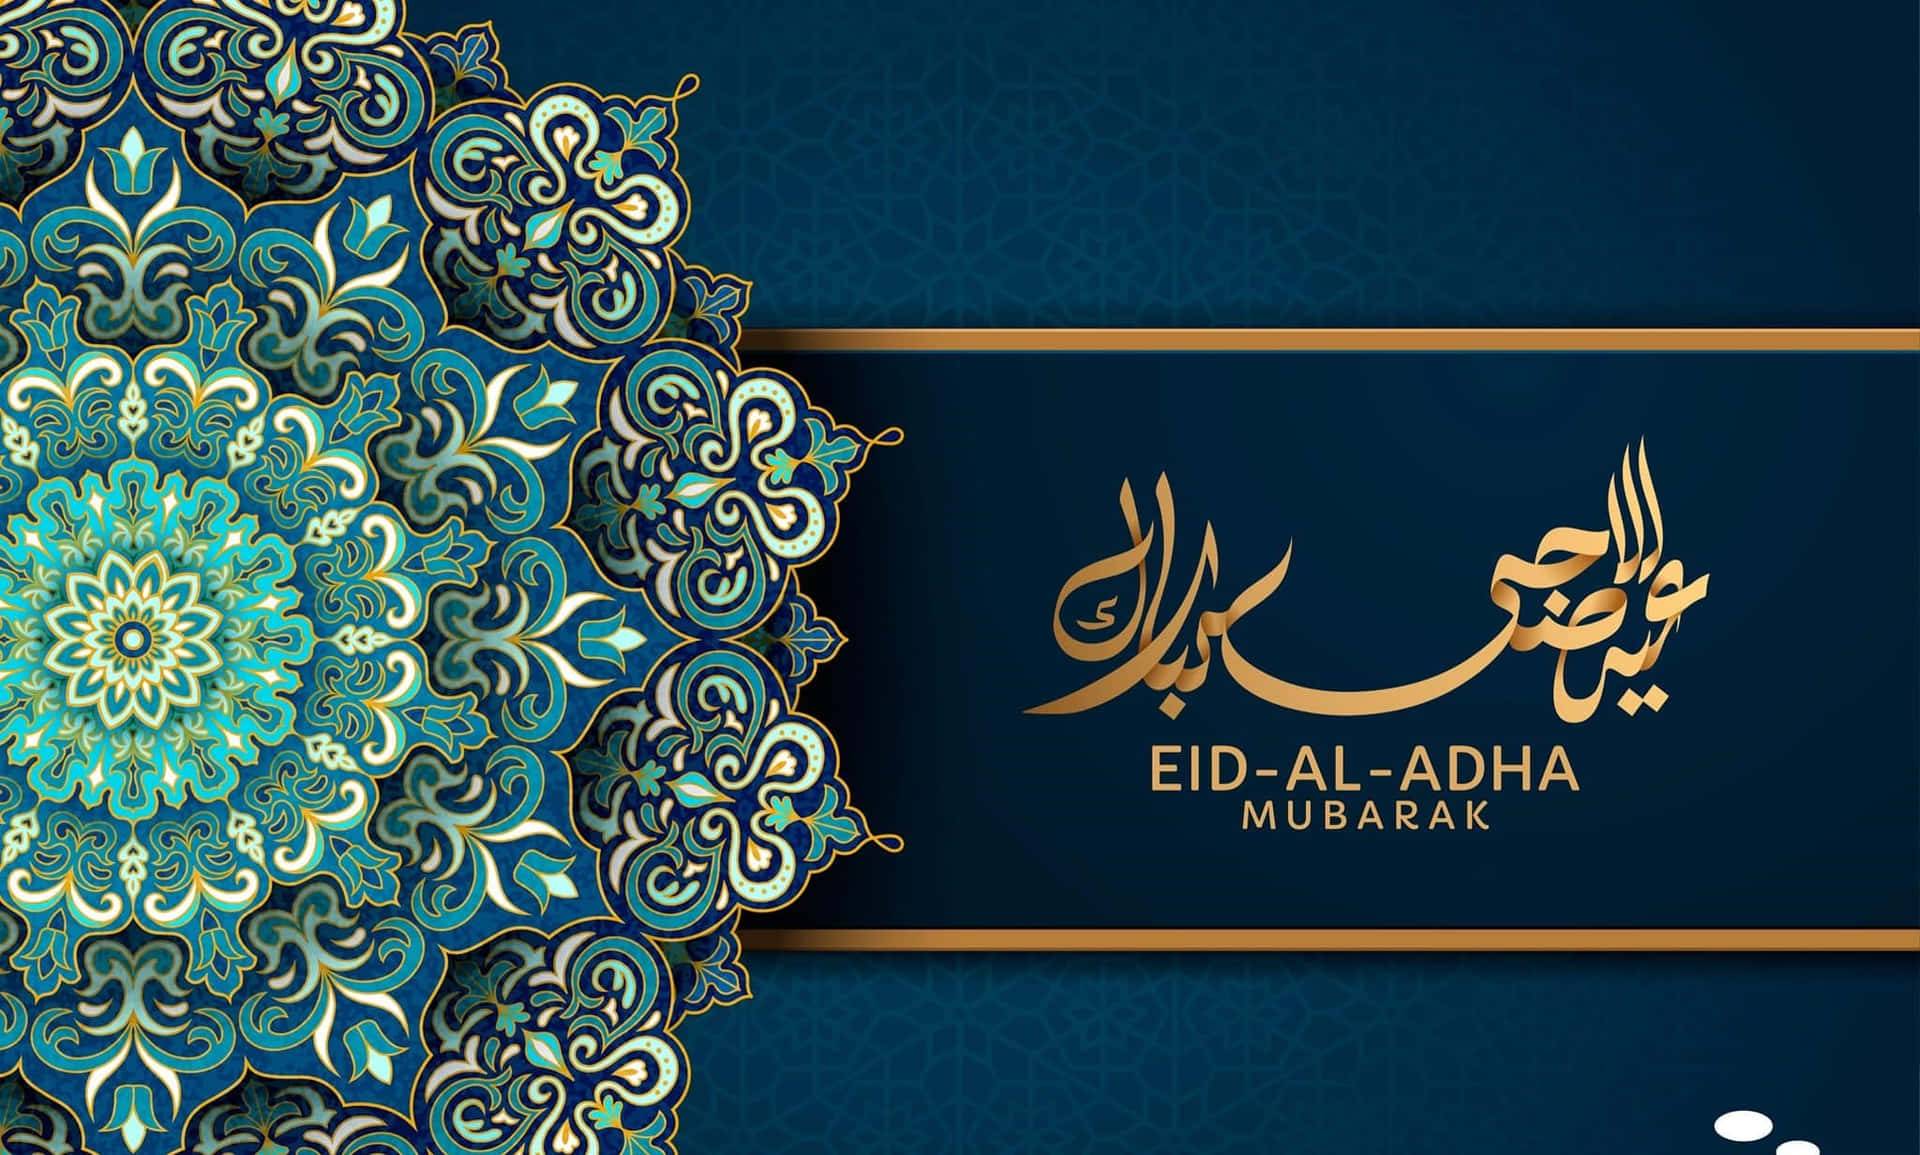 A sweet reminder of the joy and beauty of Eid Mubarak